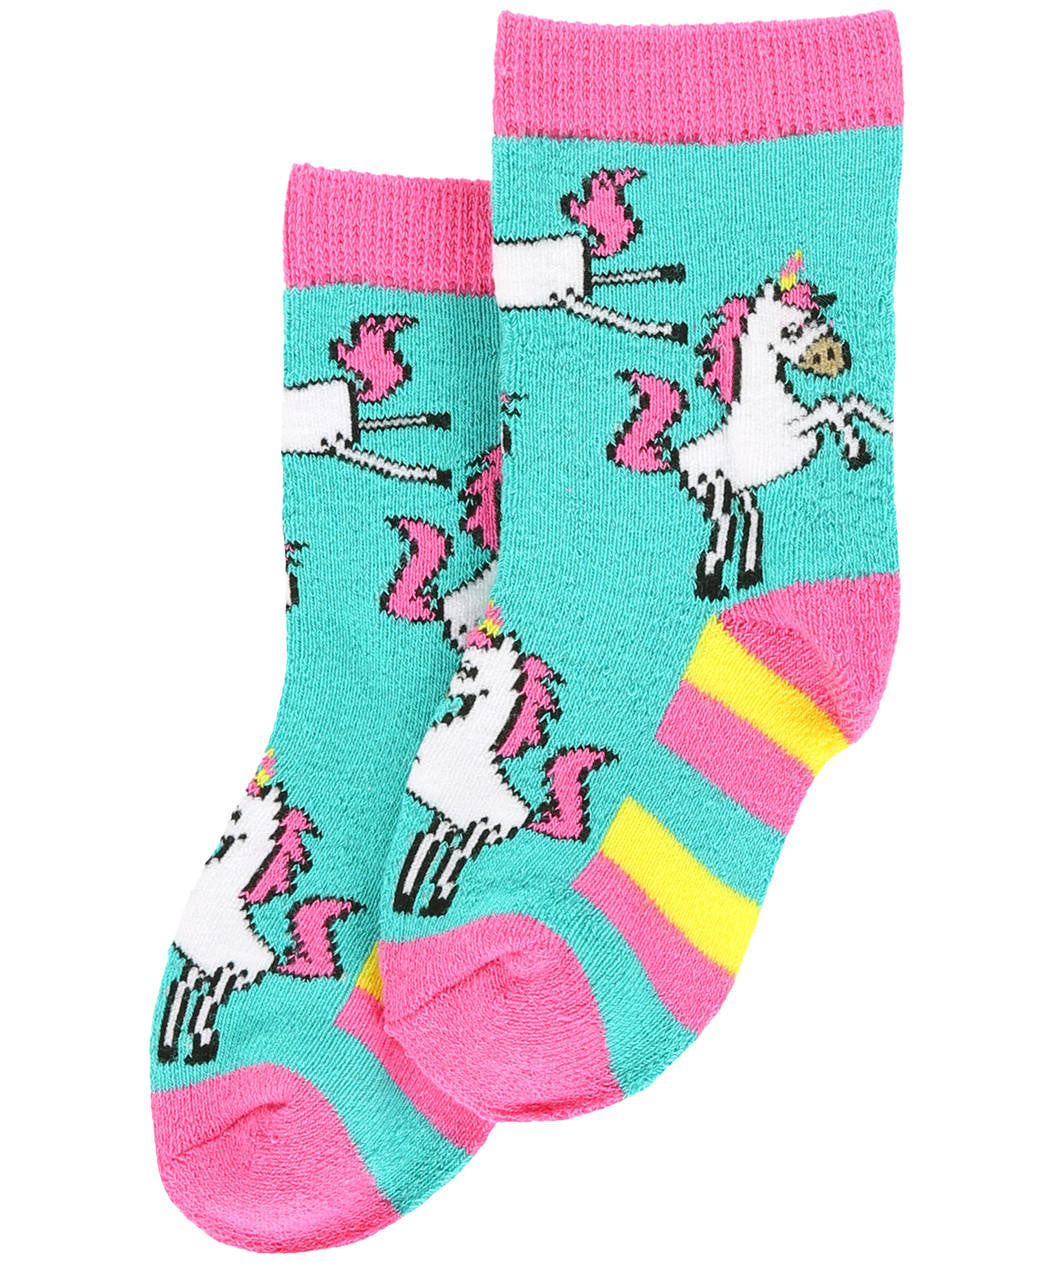 The Unicorn Infant/Kids Sock